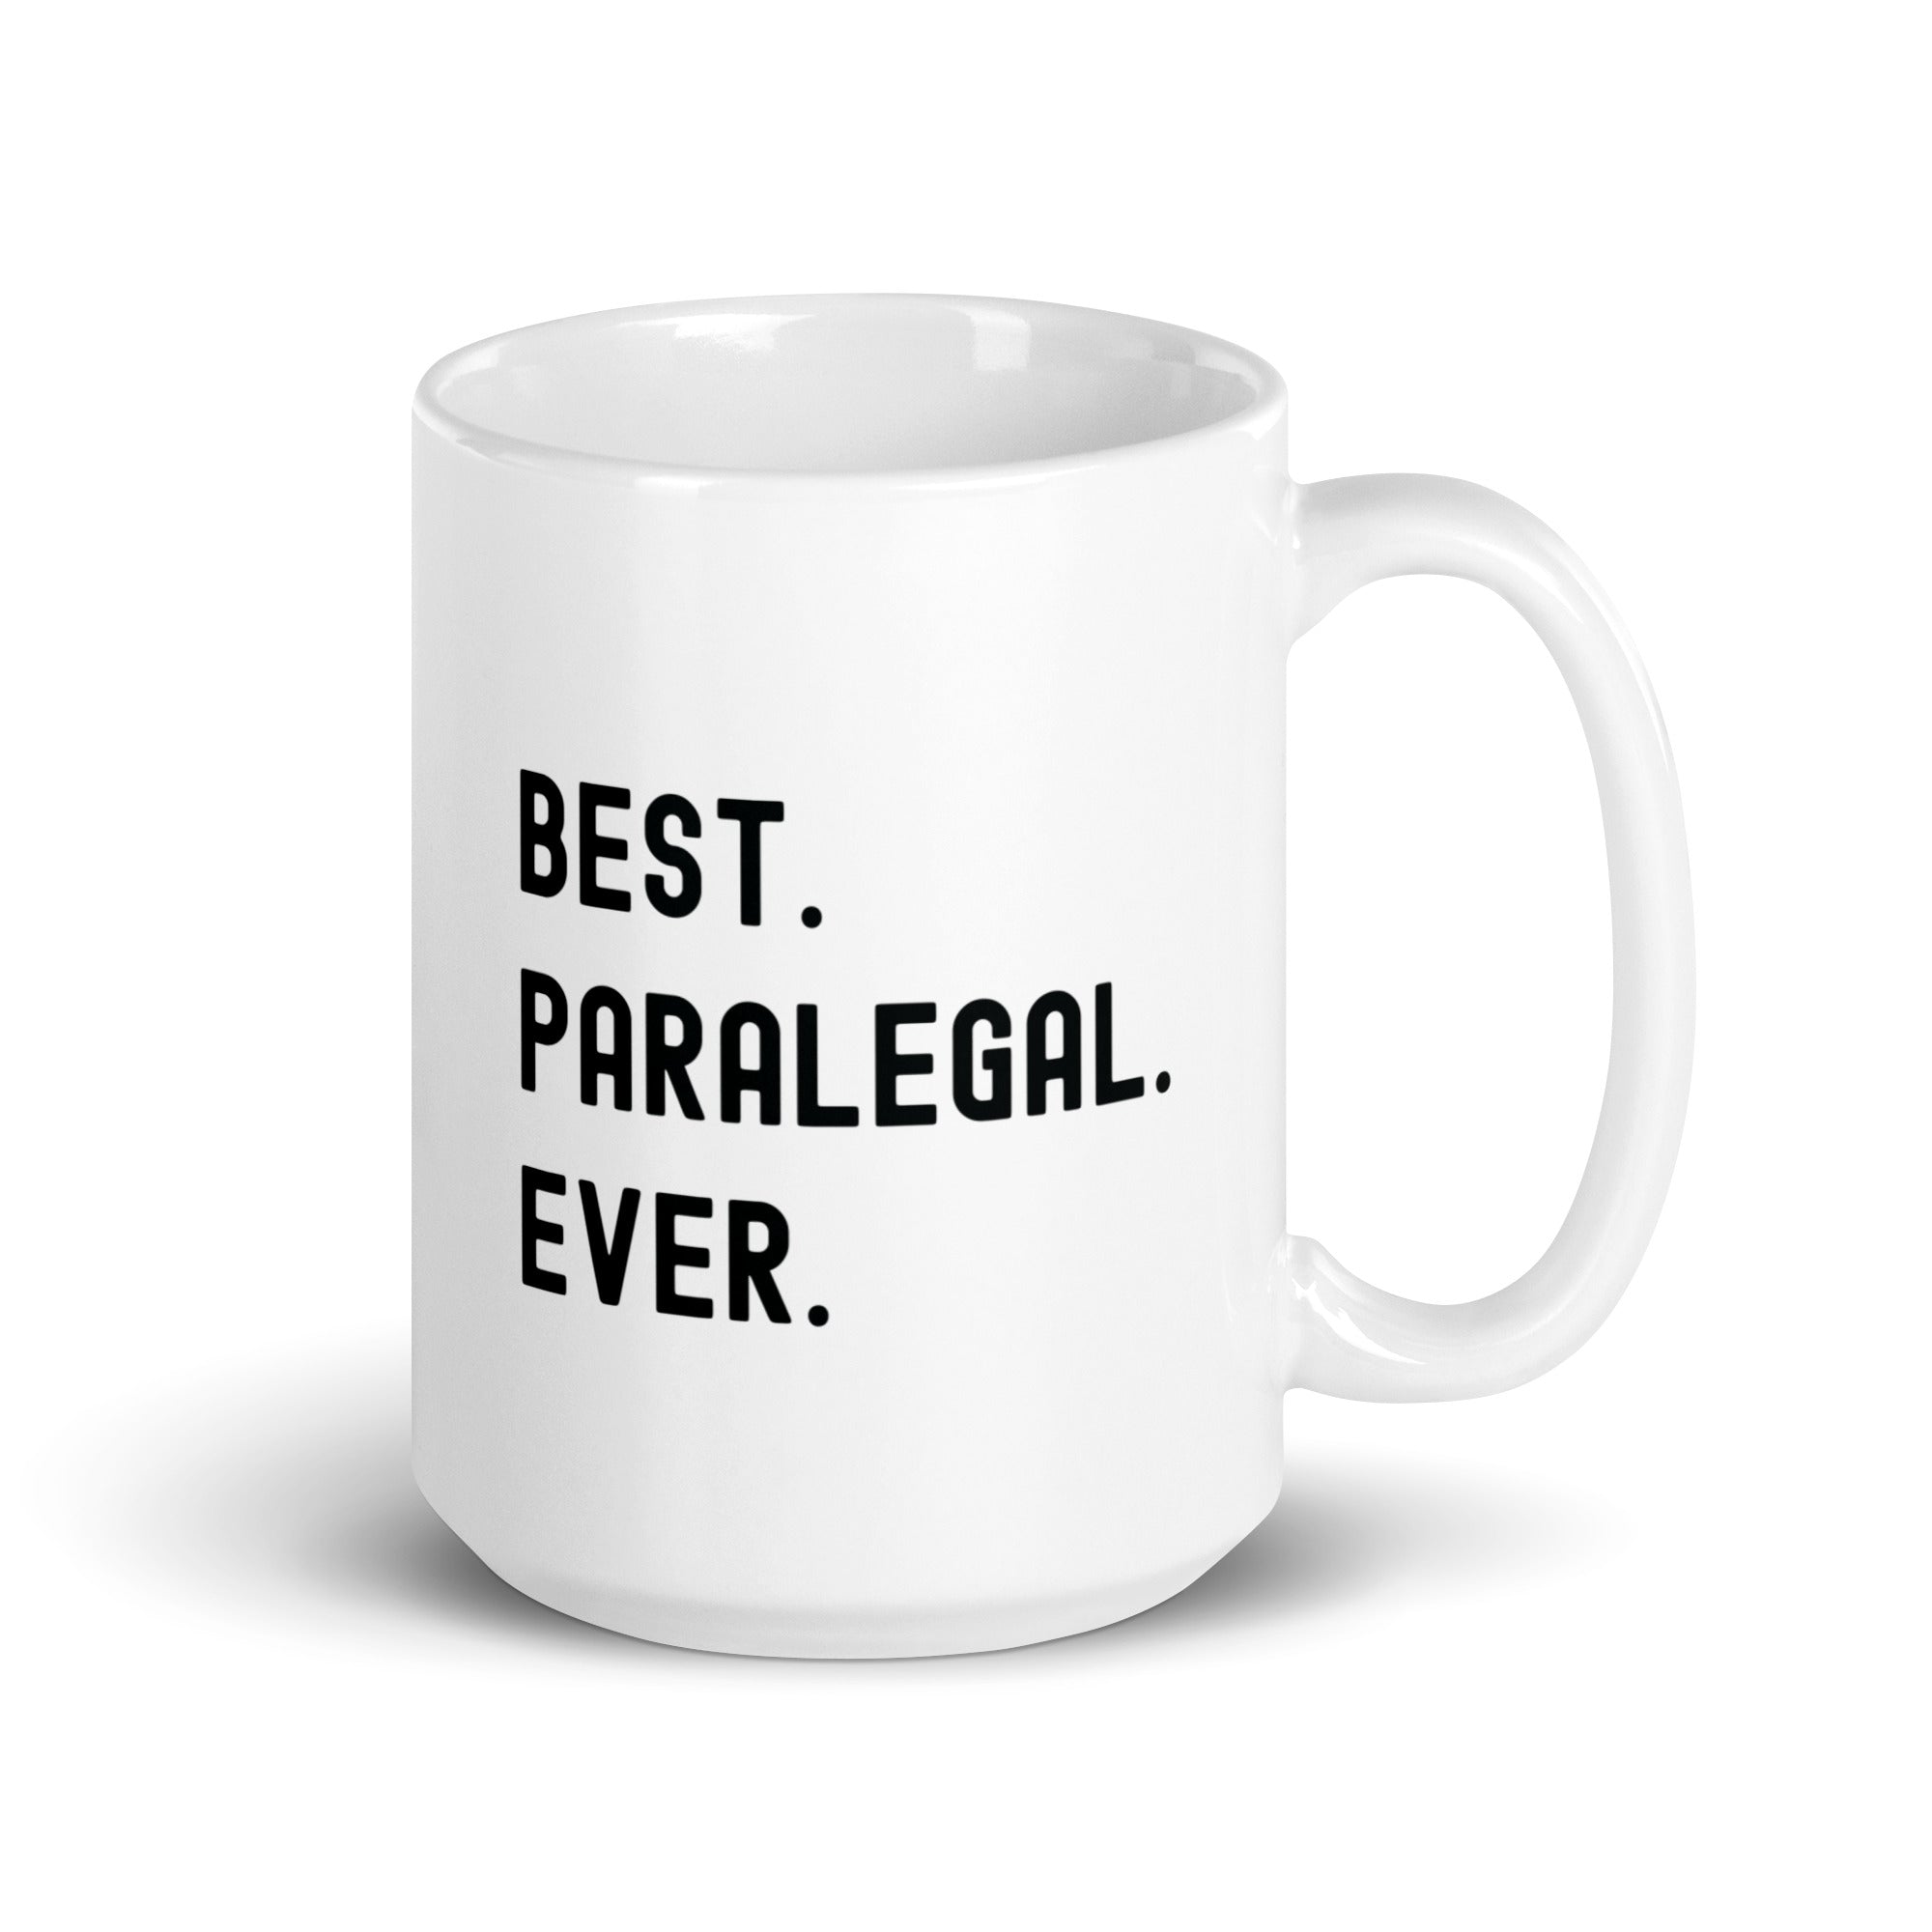 White glossy mug | Best. Paralegal. Ever.